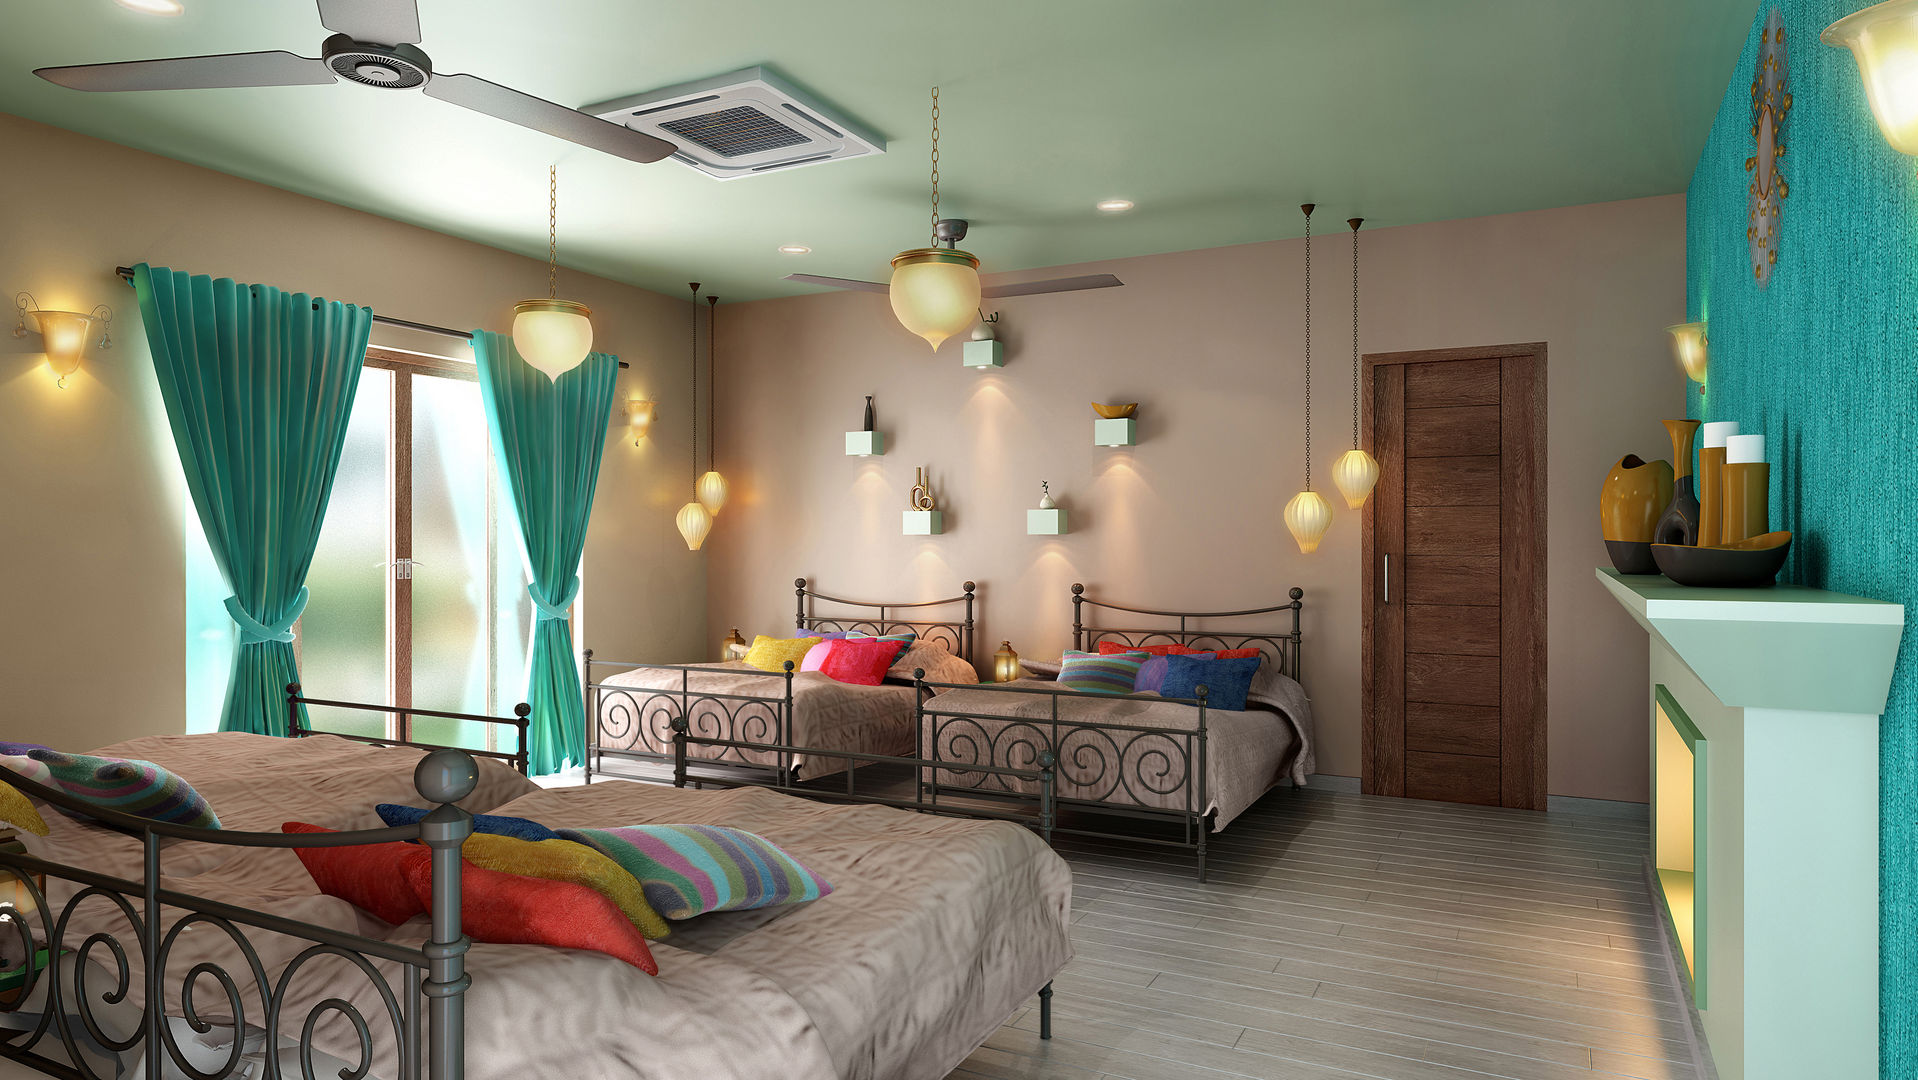 Mr. Ramesh Residence at Neyveli, Dwellion Dwellion Dormitorios modernos: Ideas, imágenes y decoración